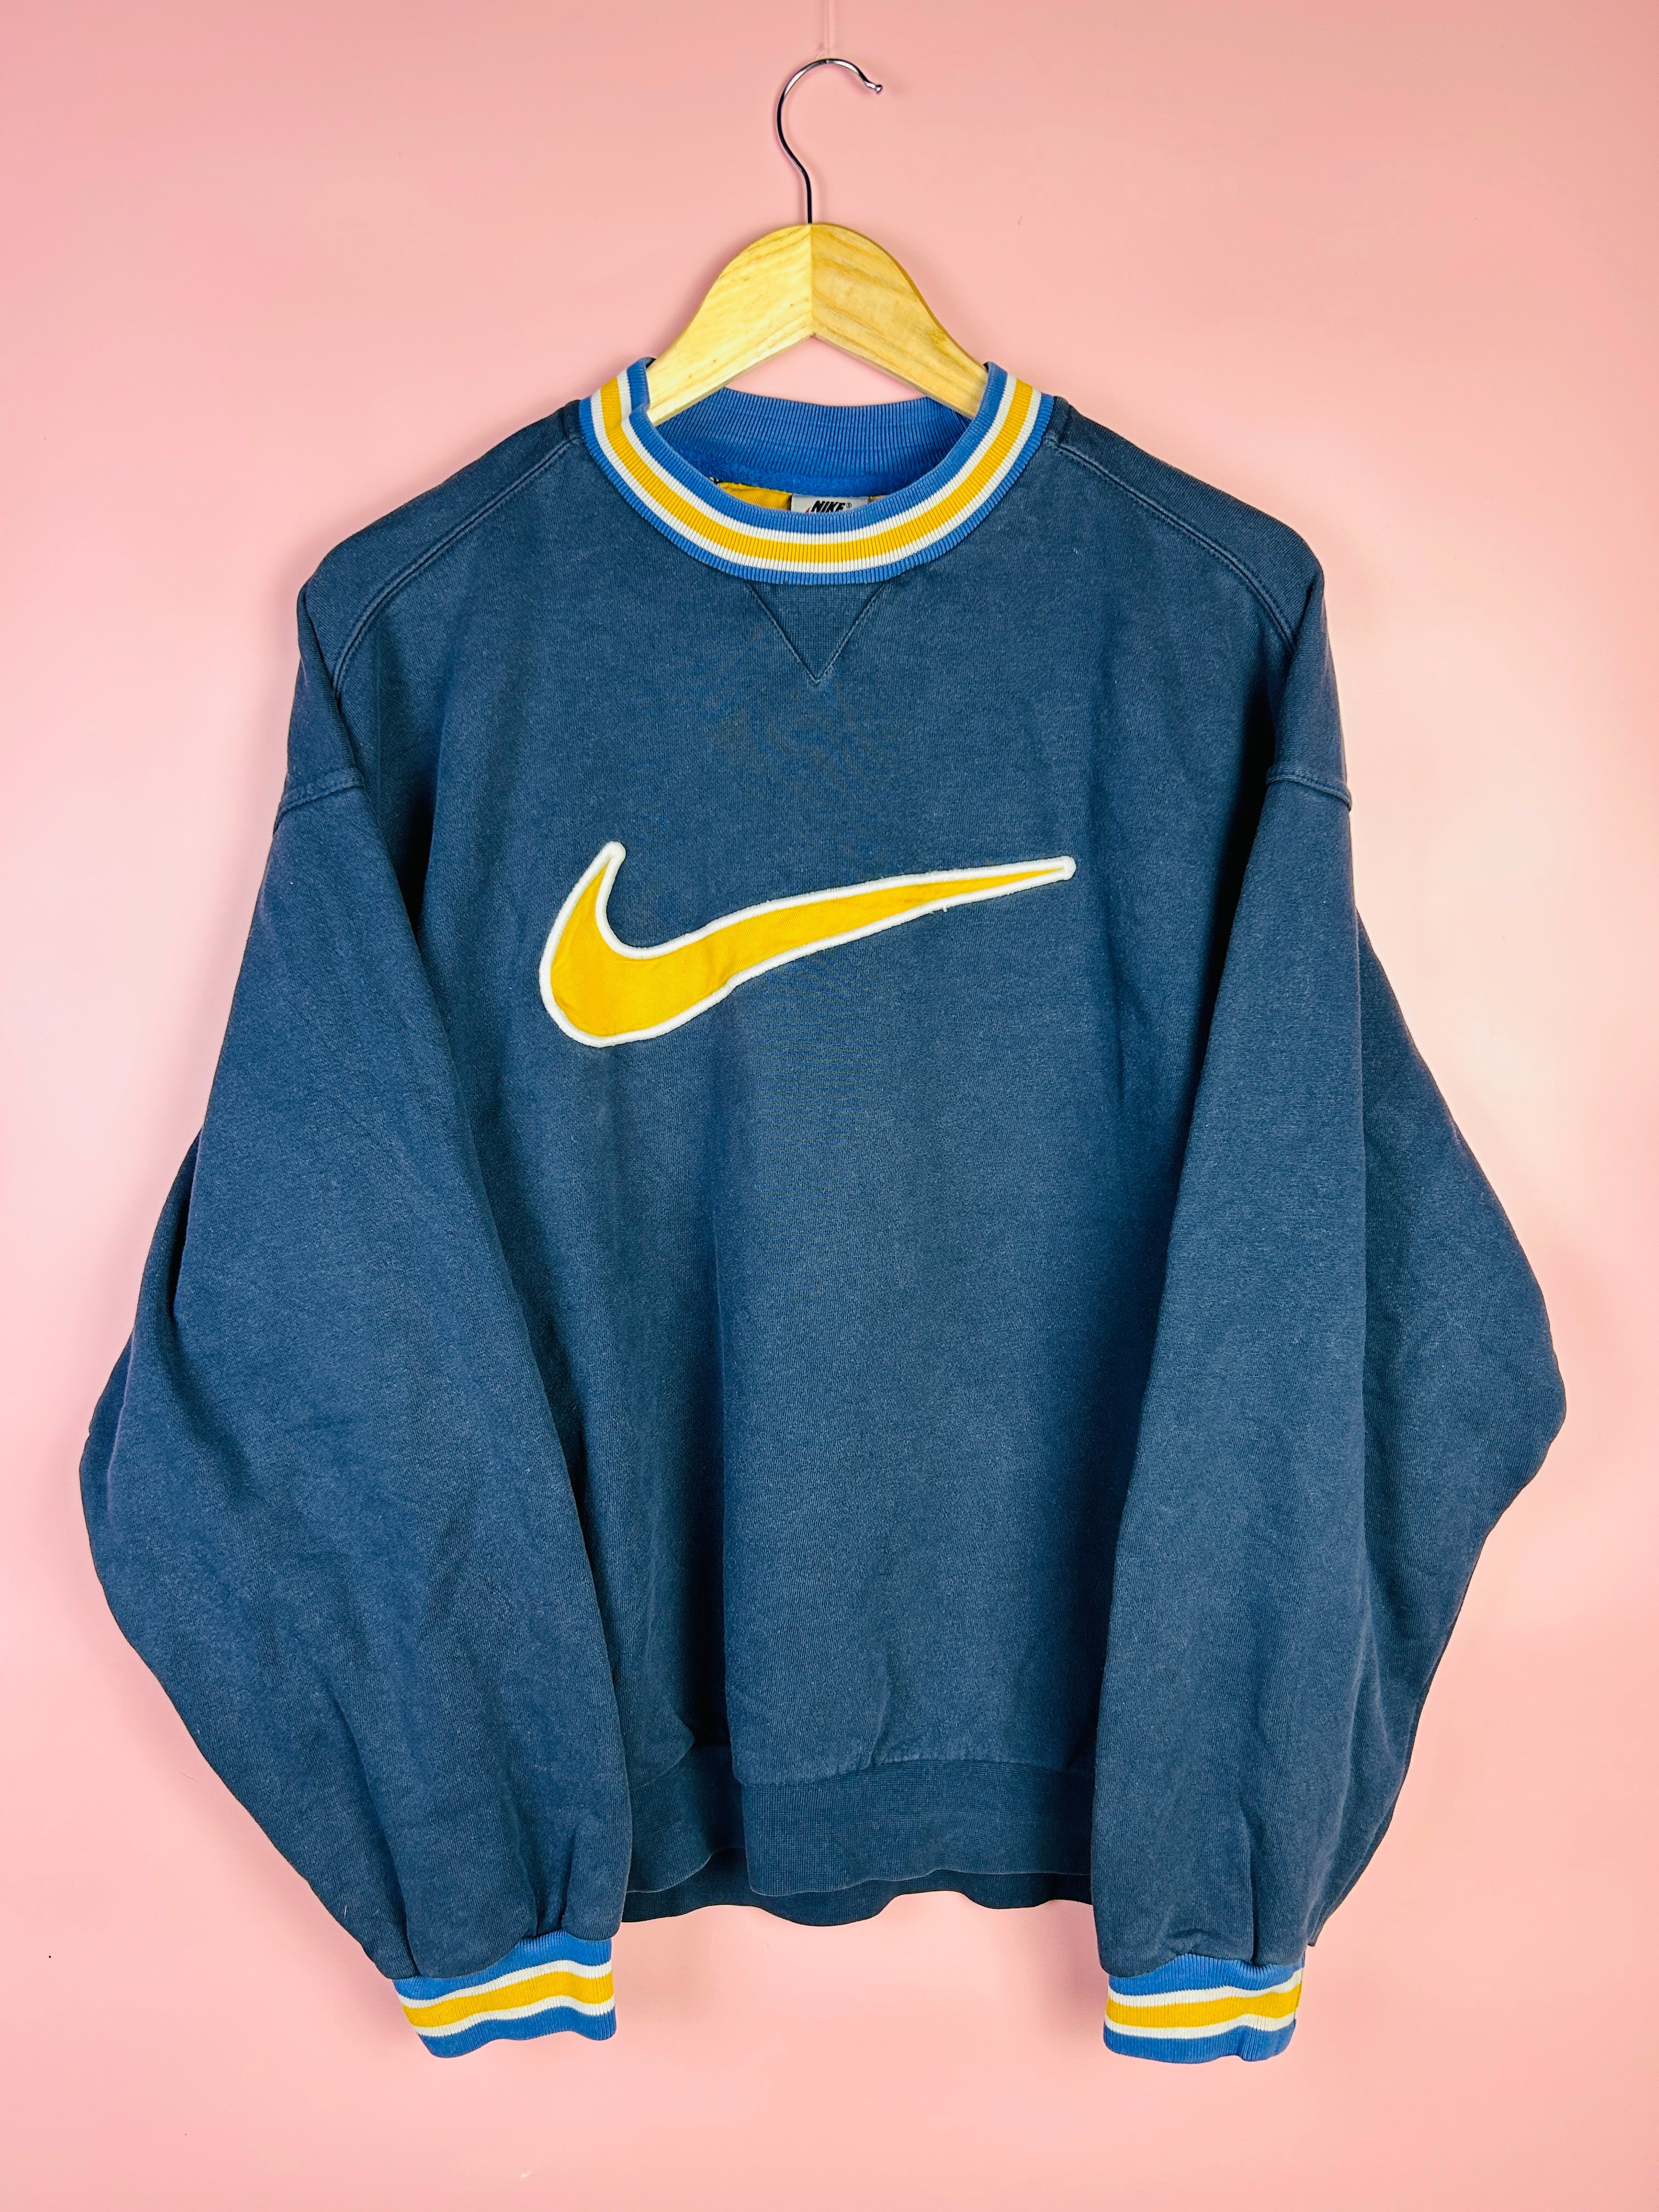 M-L Vintage Nike Sweater